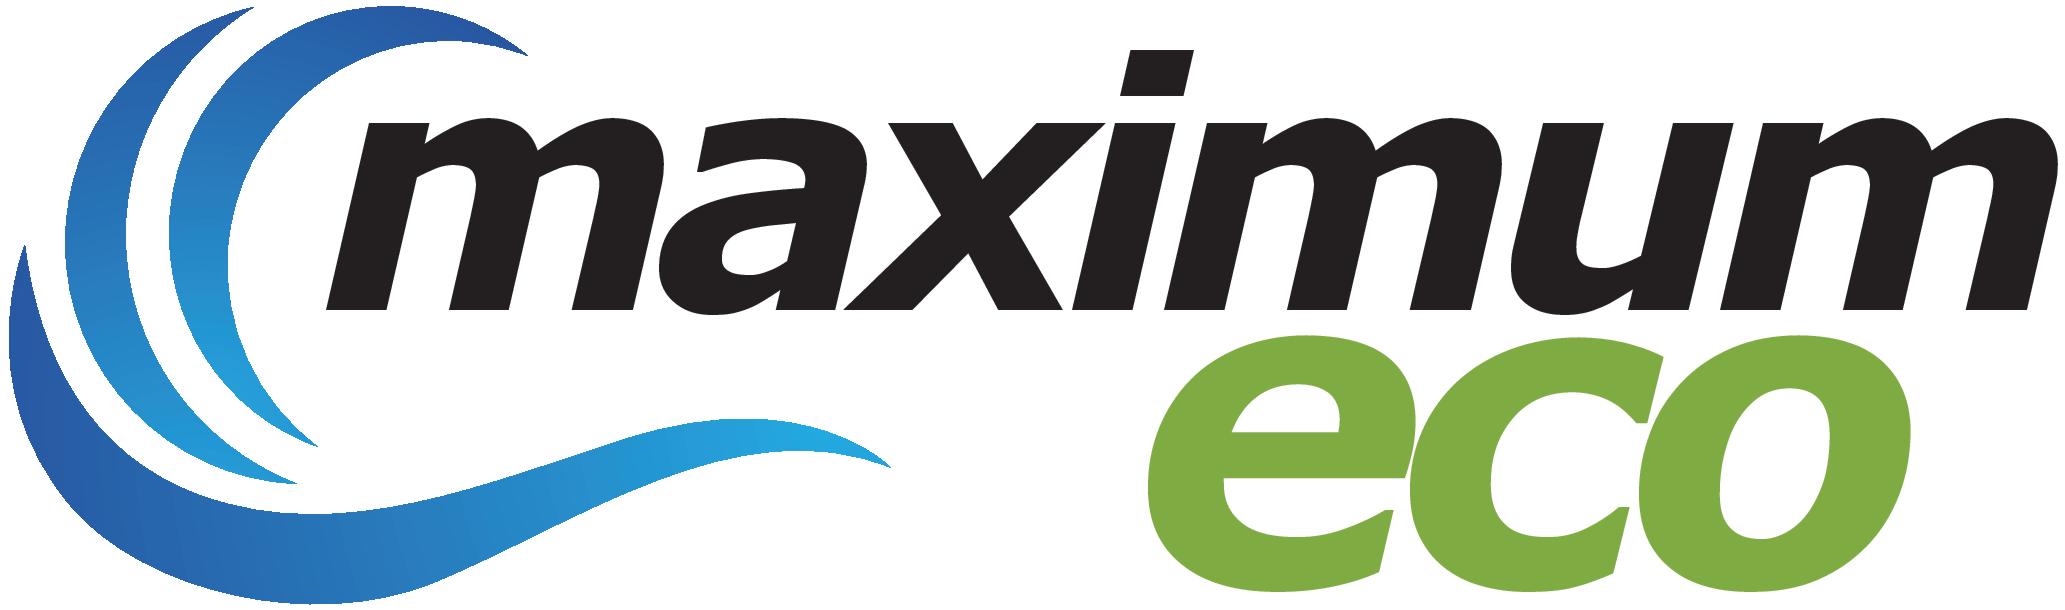 Maximum Eco Logo.jpg